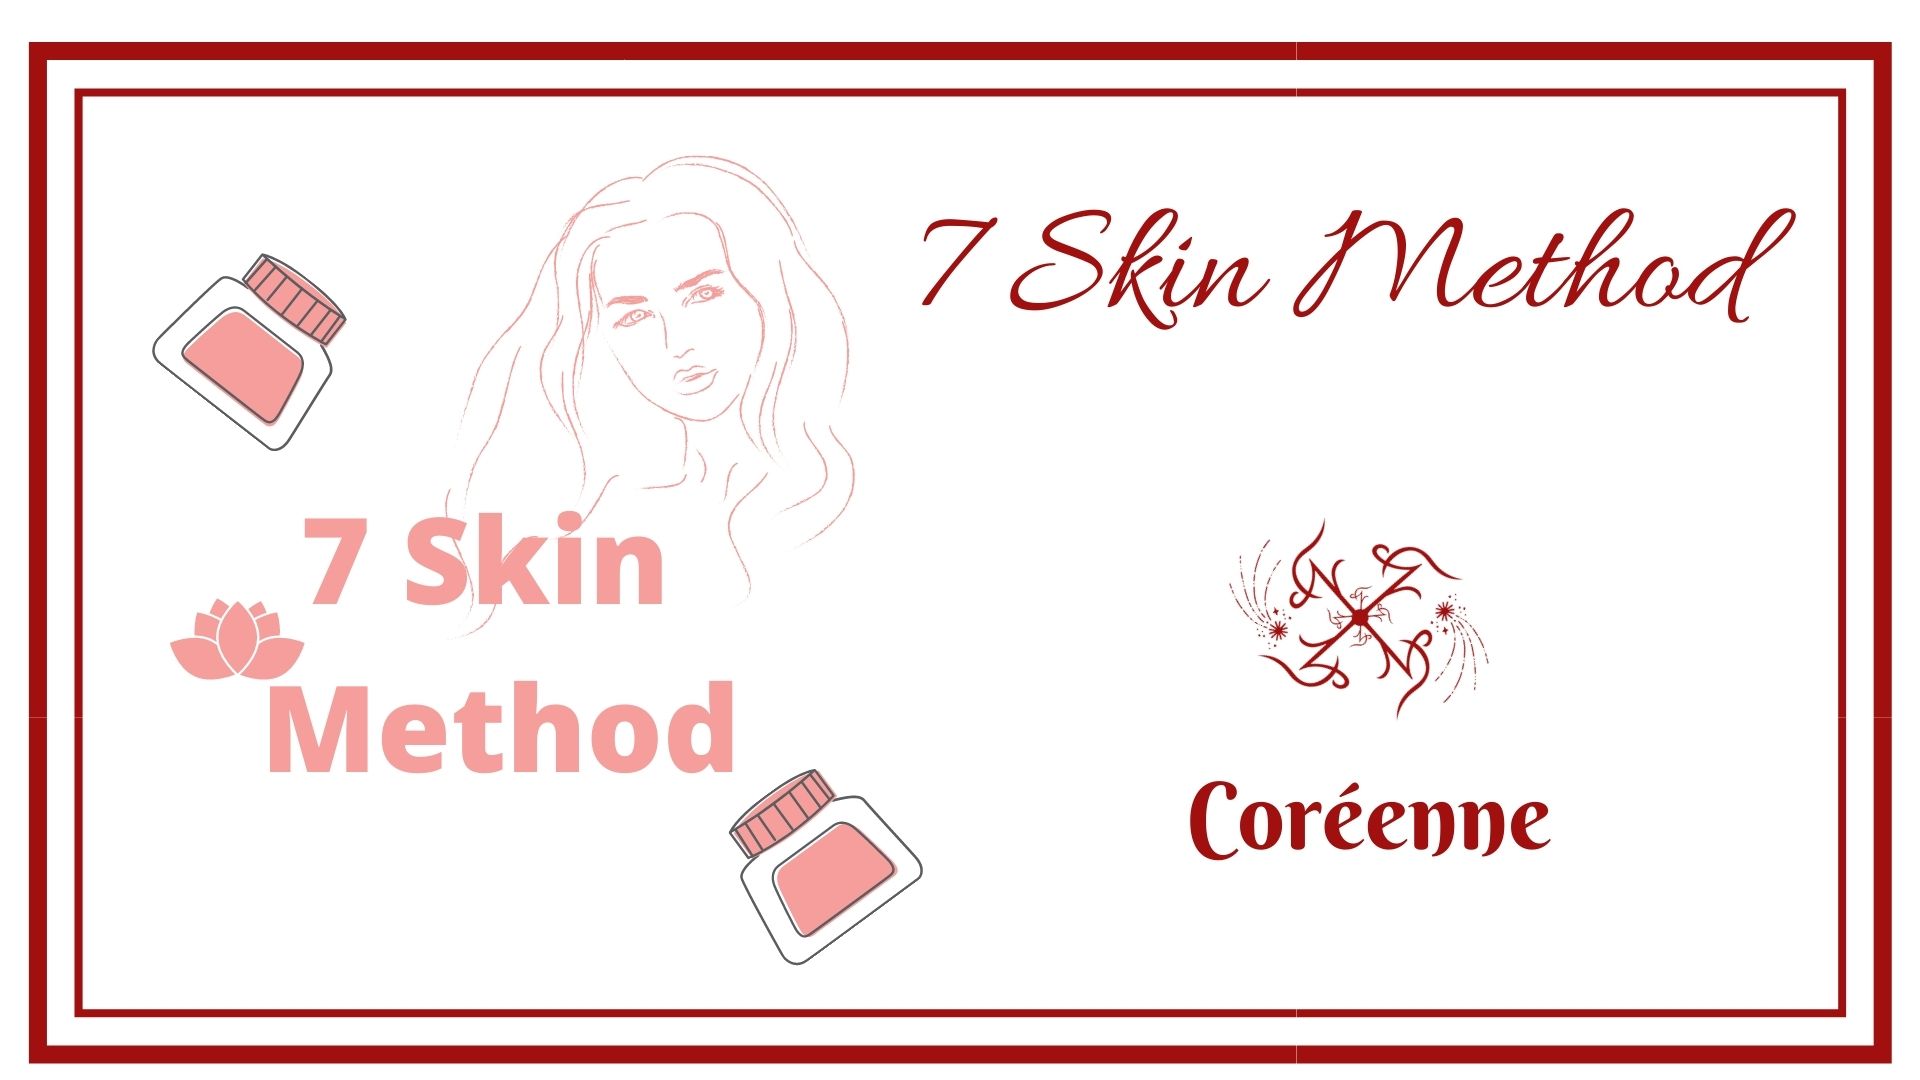 7 Skin Method